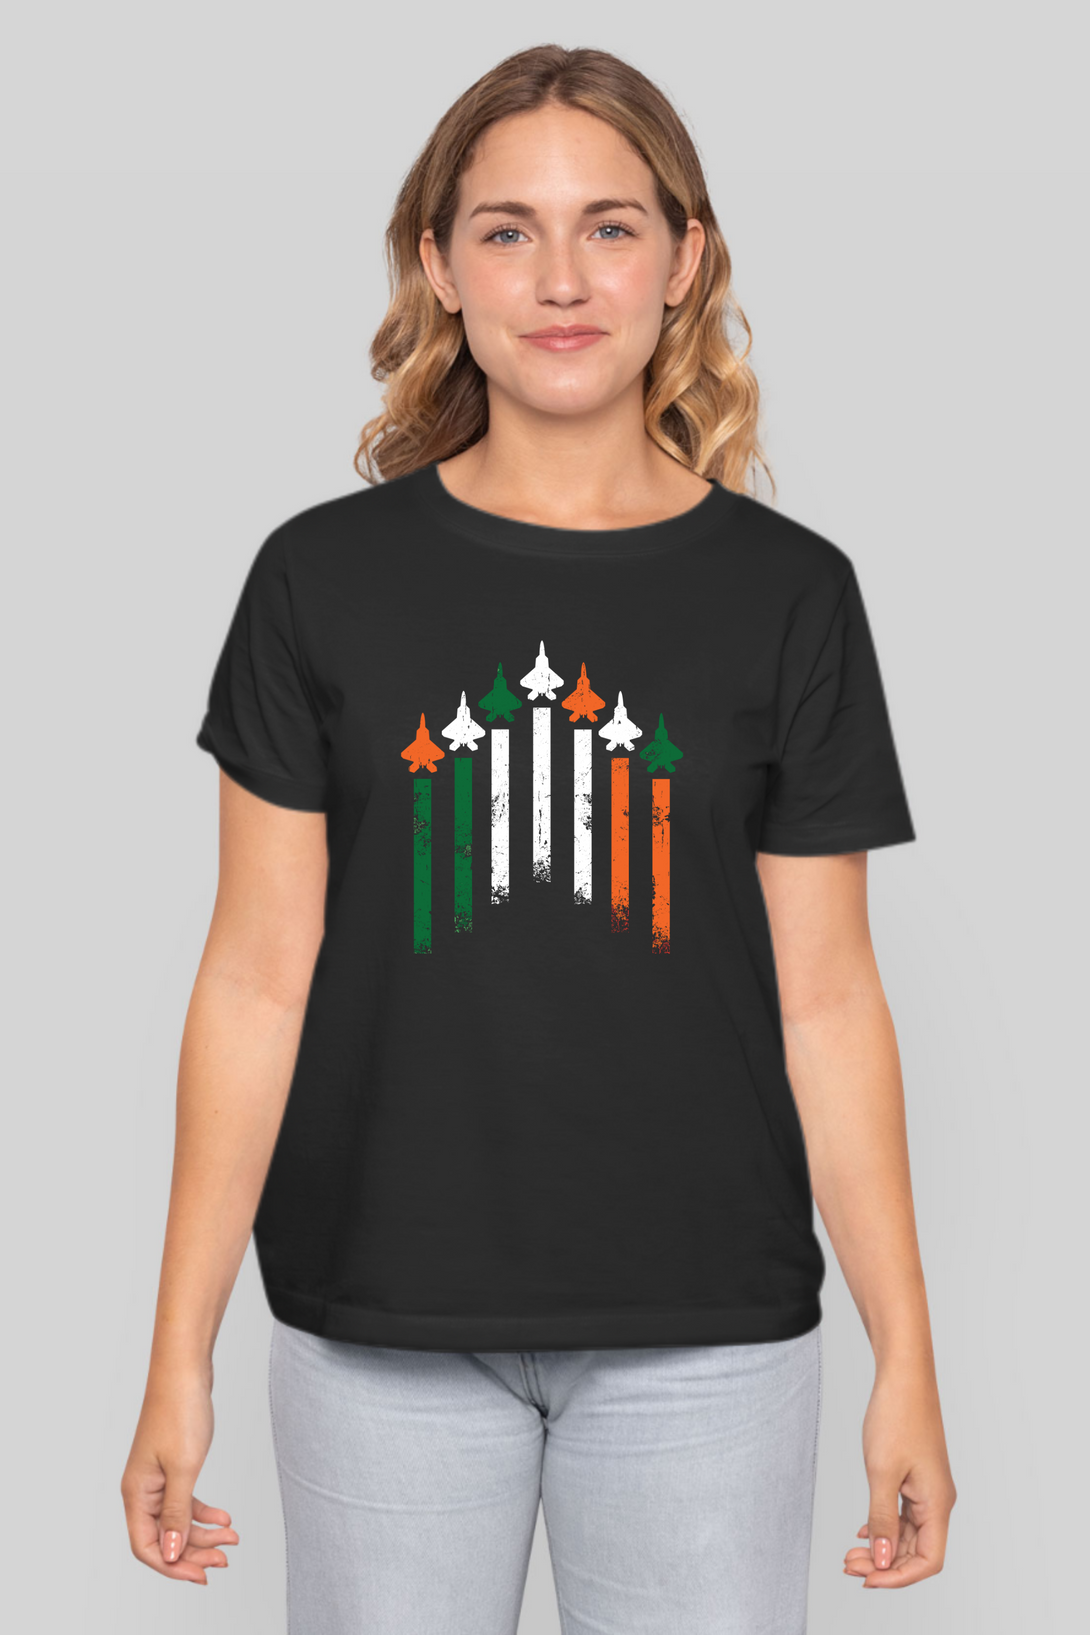 Italian National Printed T-Shirt For Women - WowWaves - 9